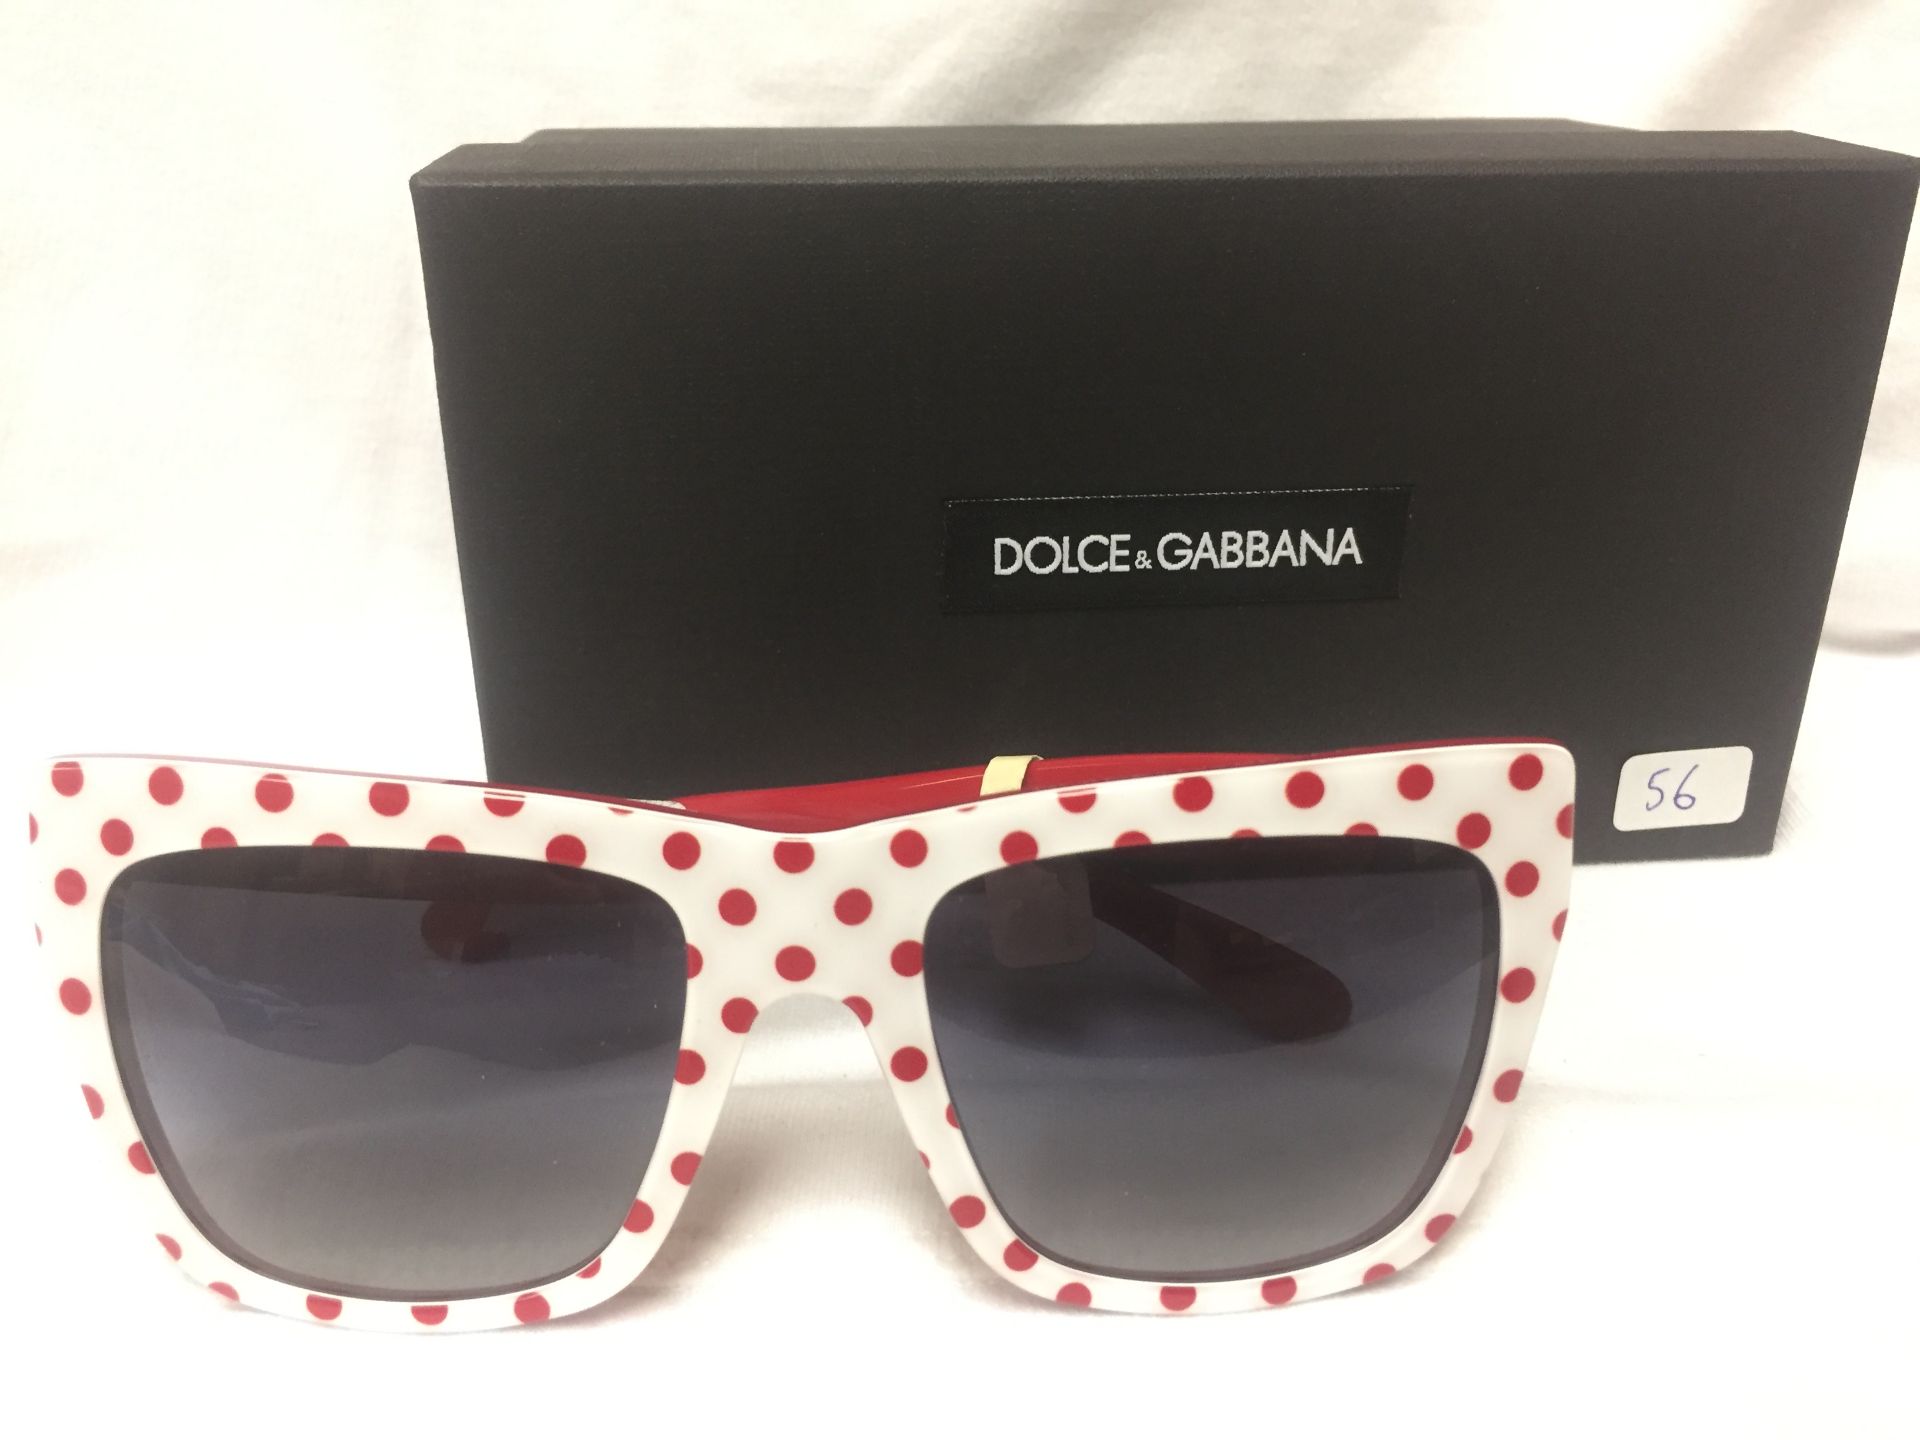 Dolce & Gabbana Sunglasses - Retail $230.00